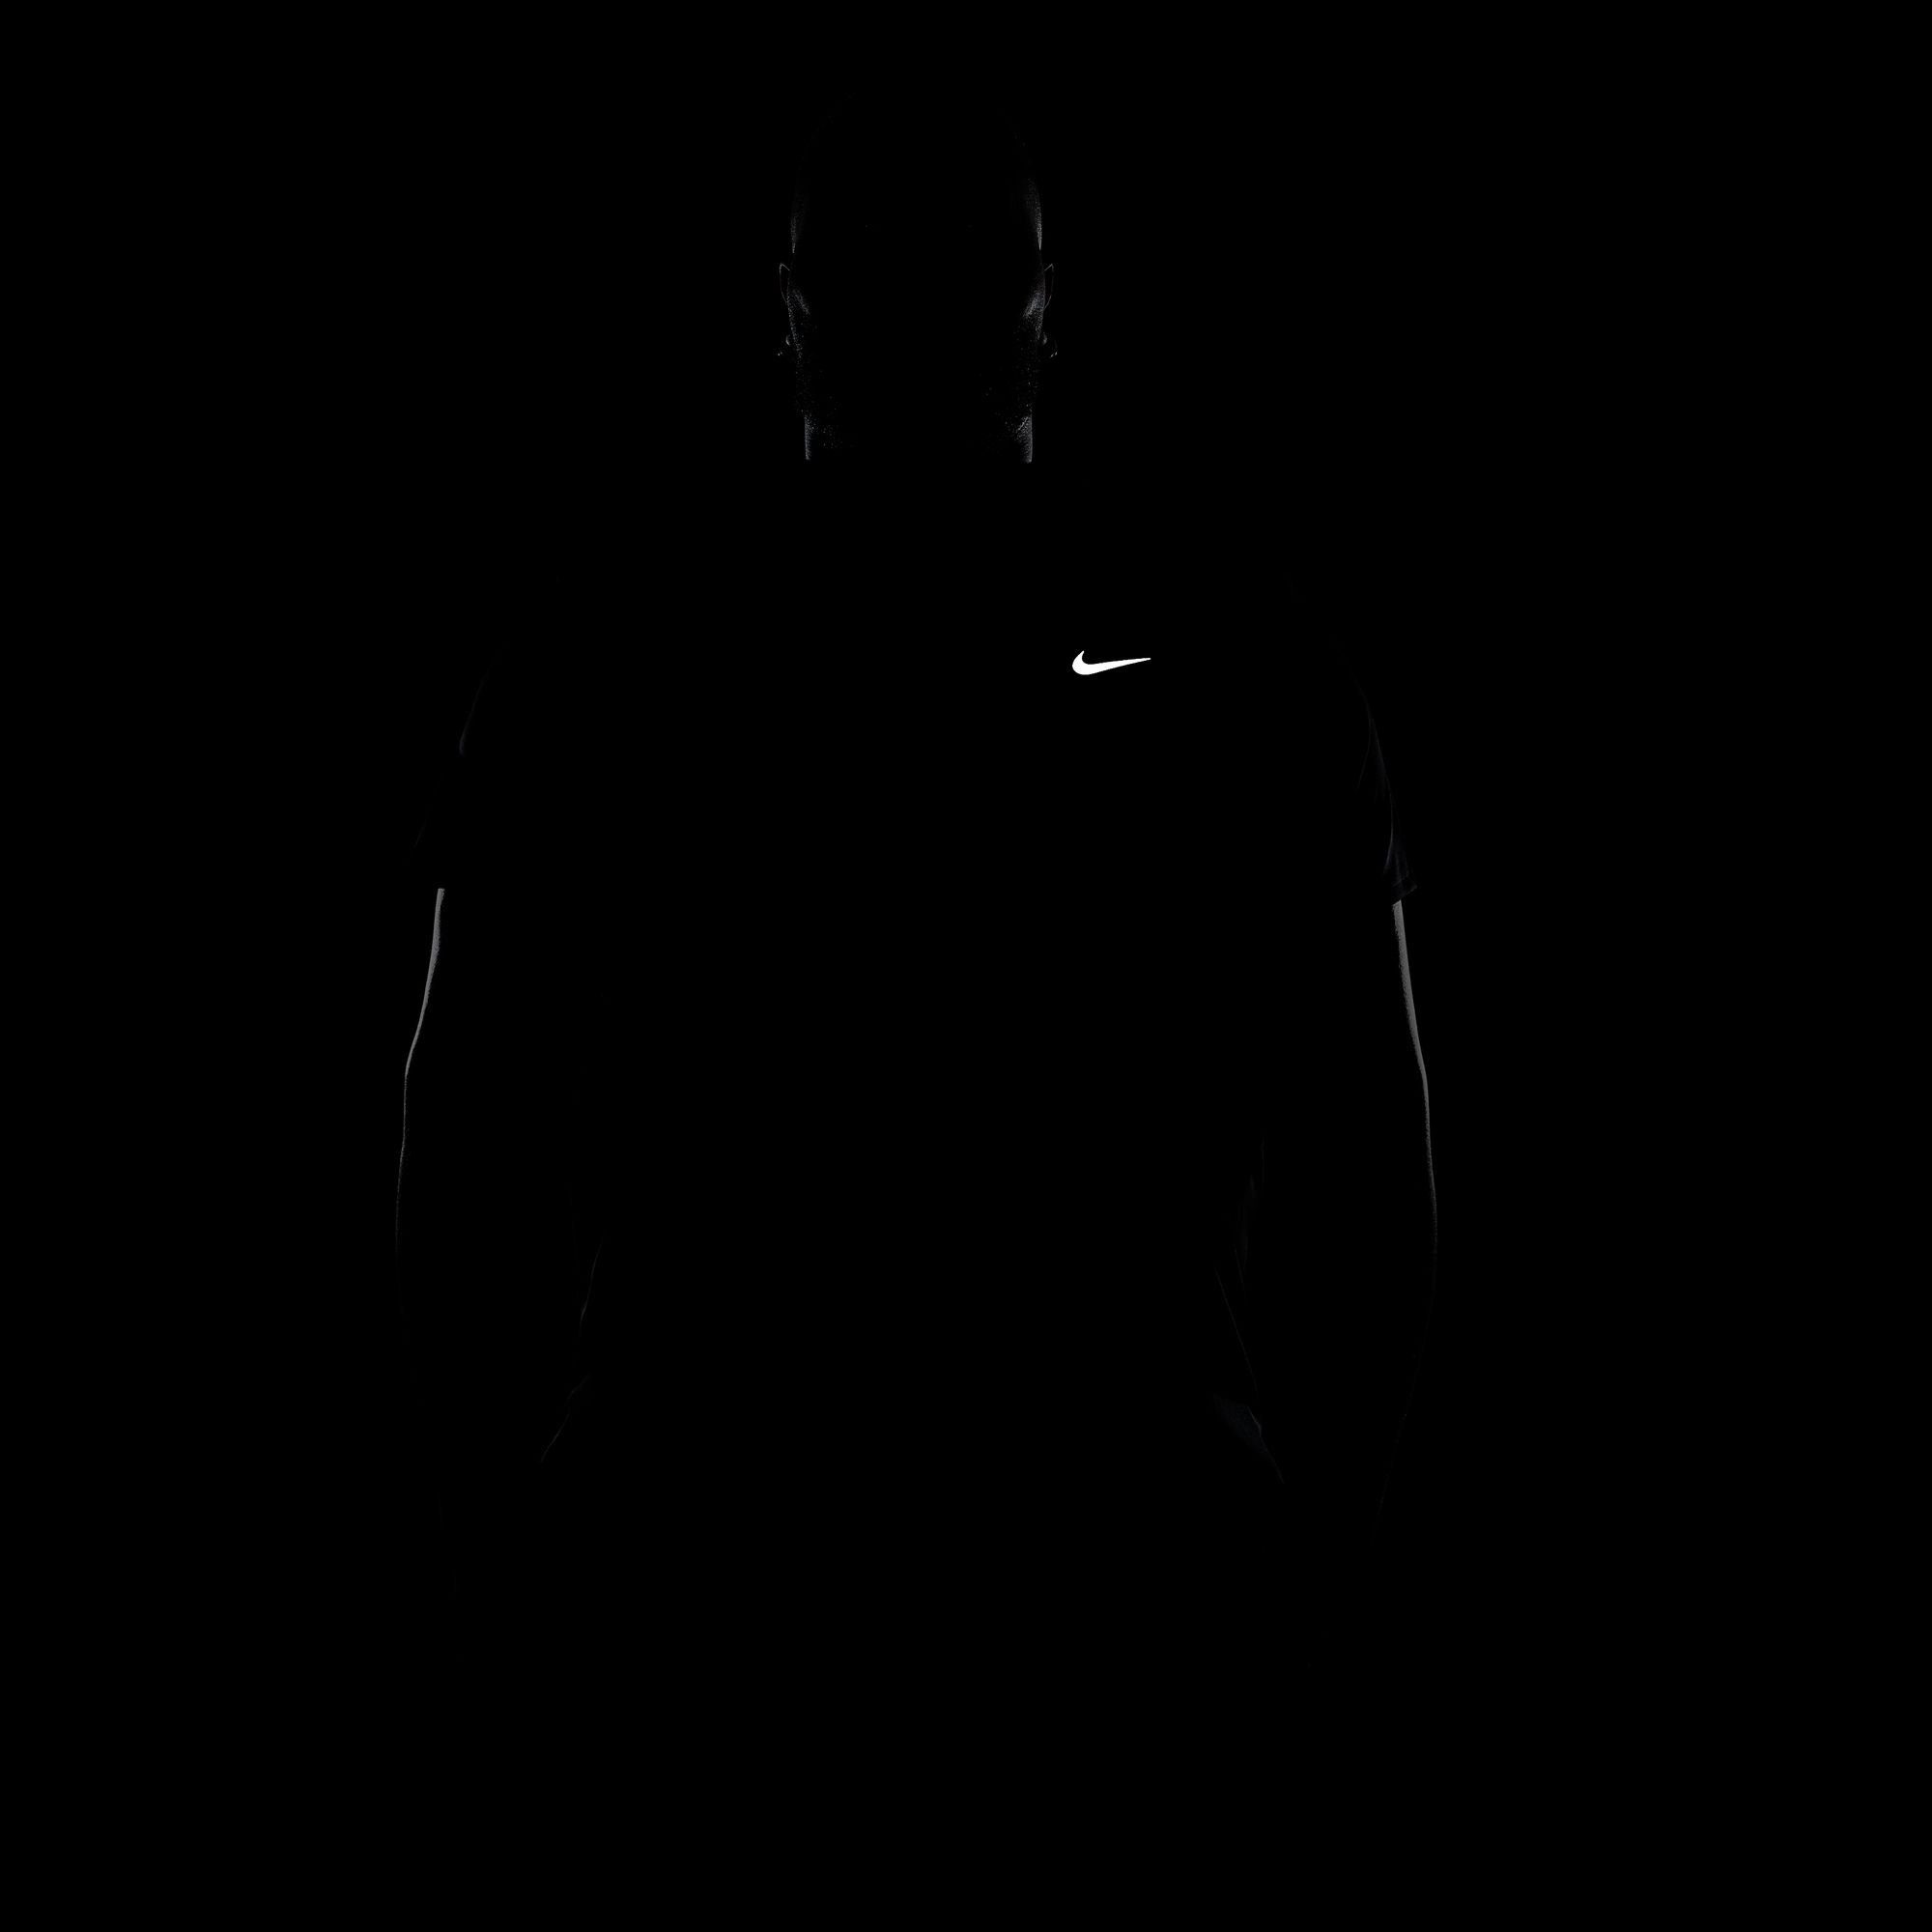 DRI-FIT SILV MEN'S SHORT-SLEEVE Nike Laufshirt MILER UV RUNNING BLACK/REFLECTIVE TOP